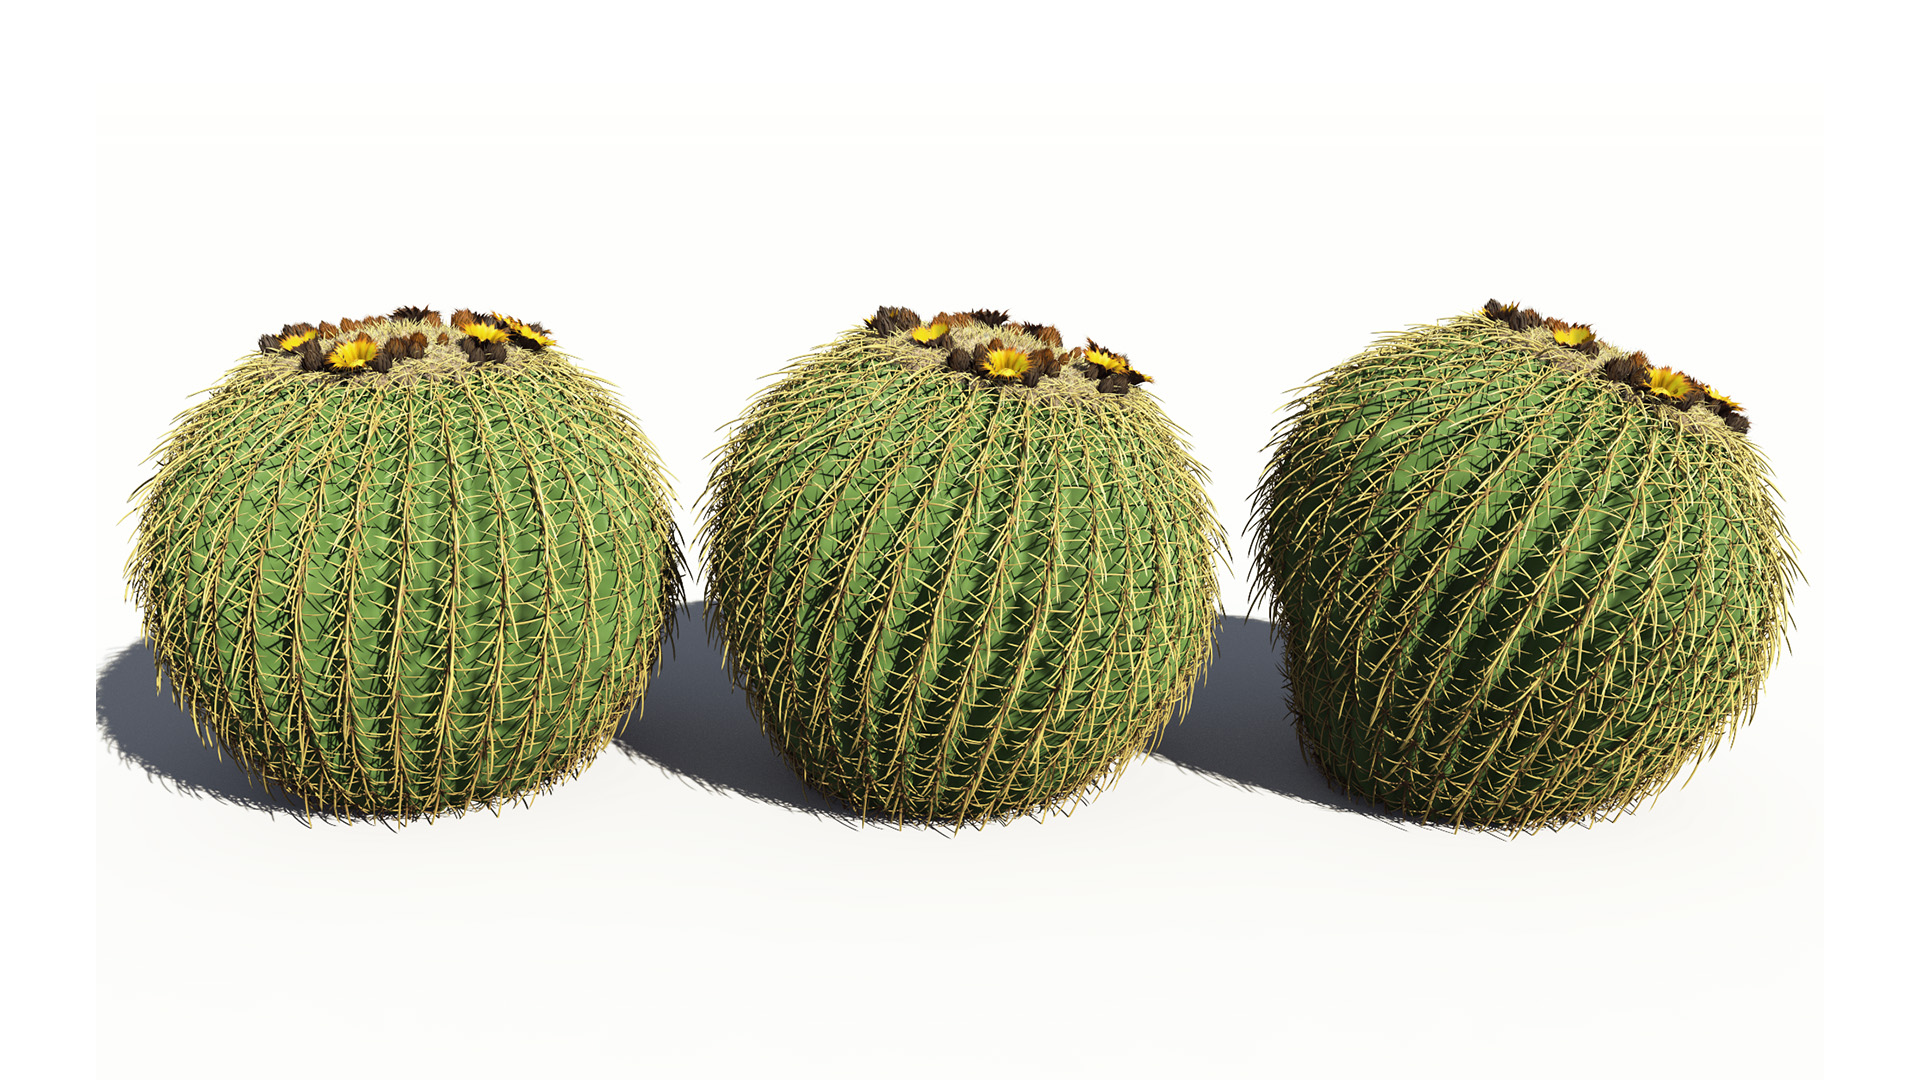 3D model of the Golden barrel cactus Echinocactus grusonii